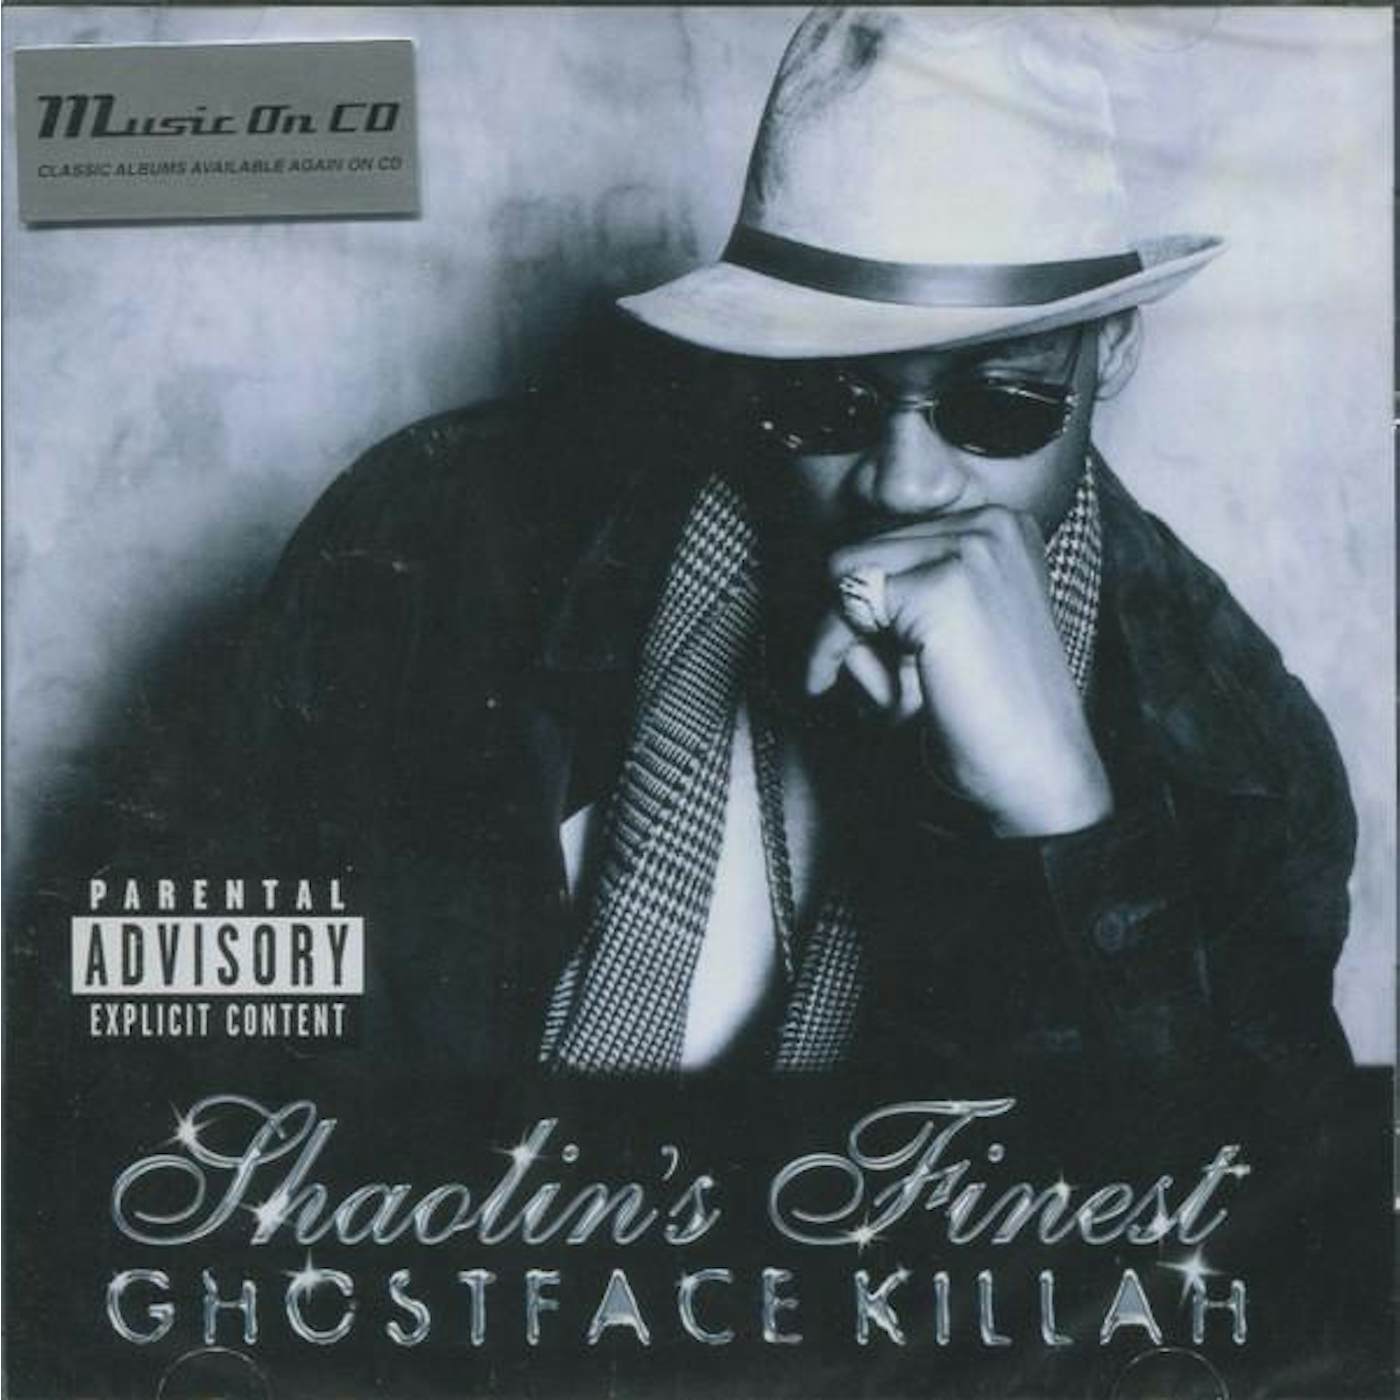 Ghostface Killah SHAOLIN'S FINEST CD